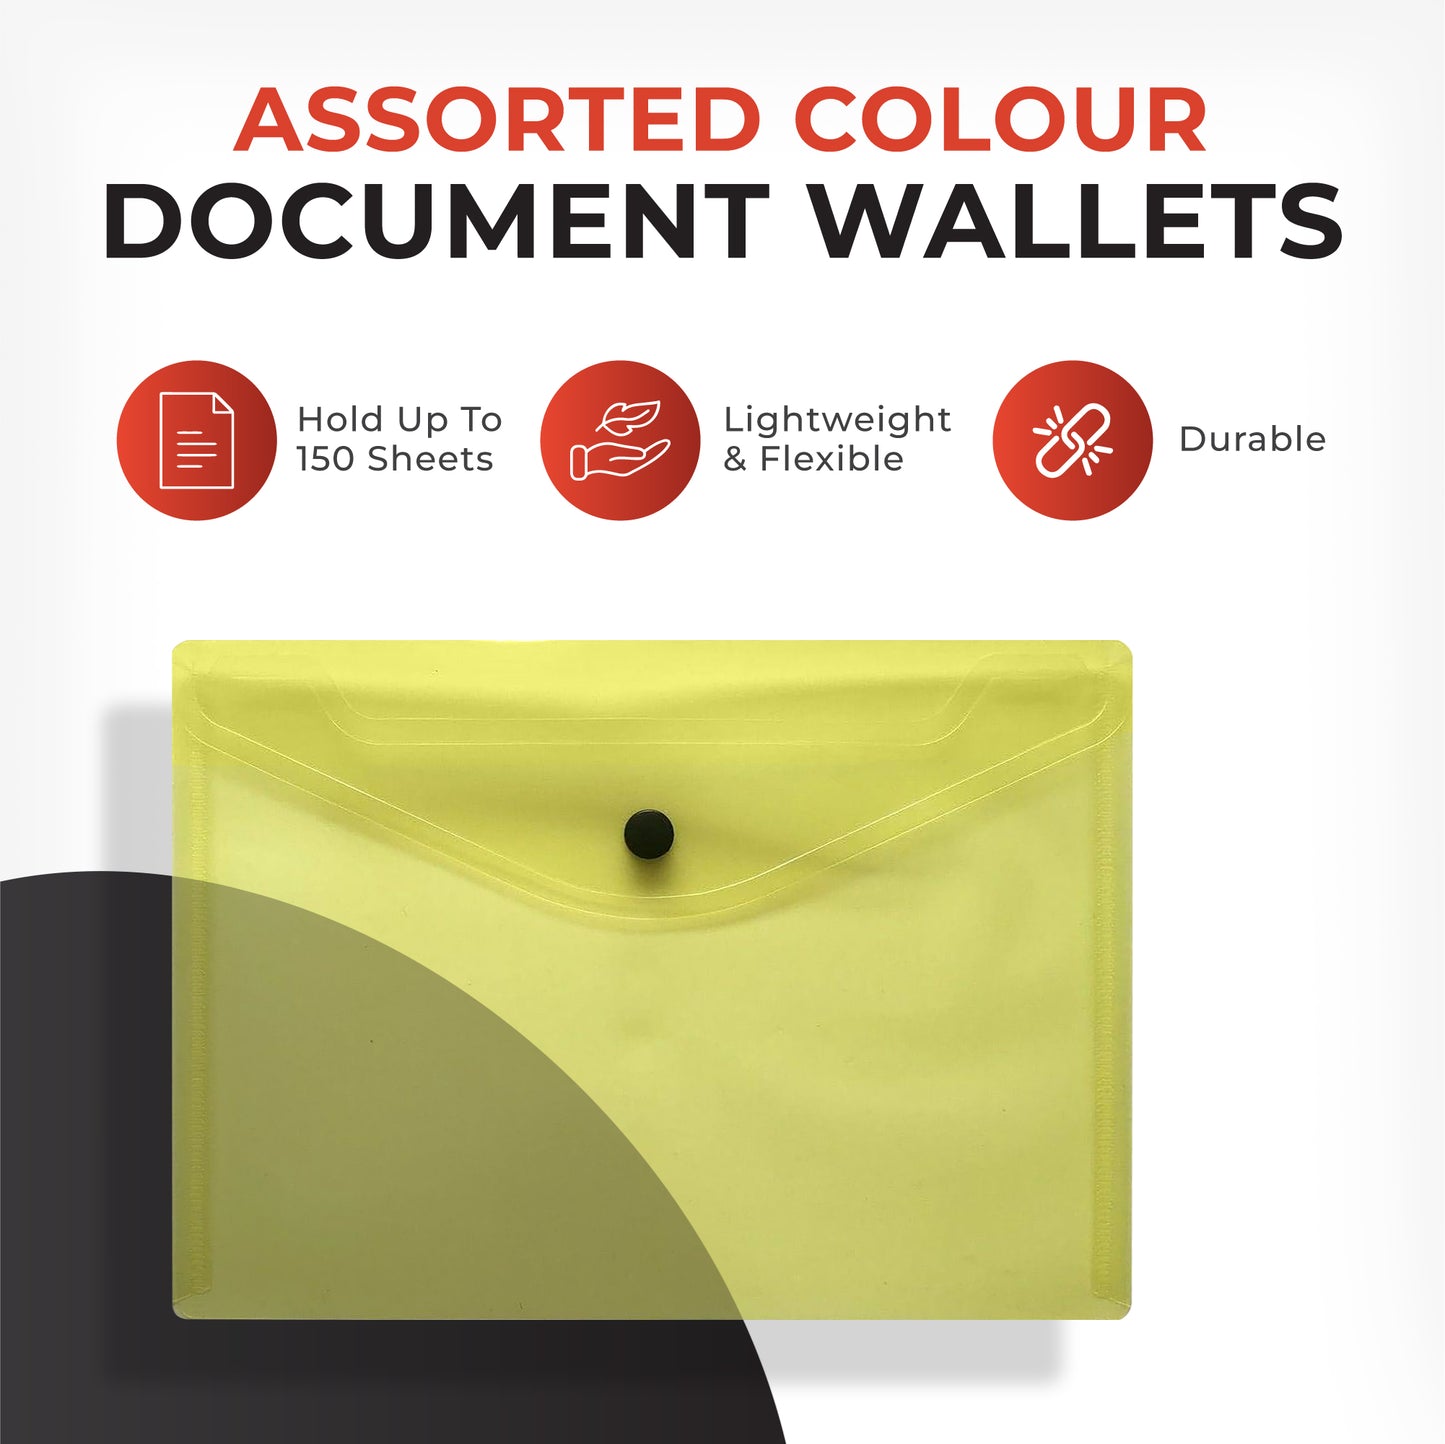 Pack of 12 Janrax A4 Blue Document Wallets - Button Stud Folder